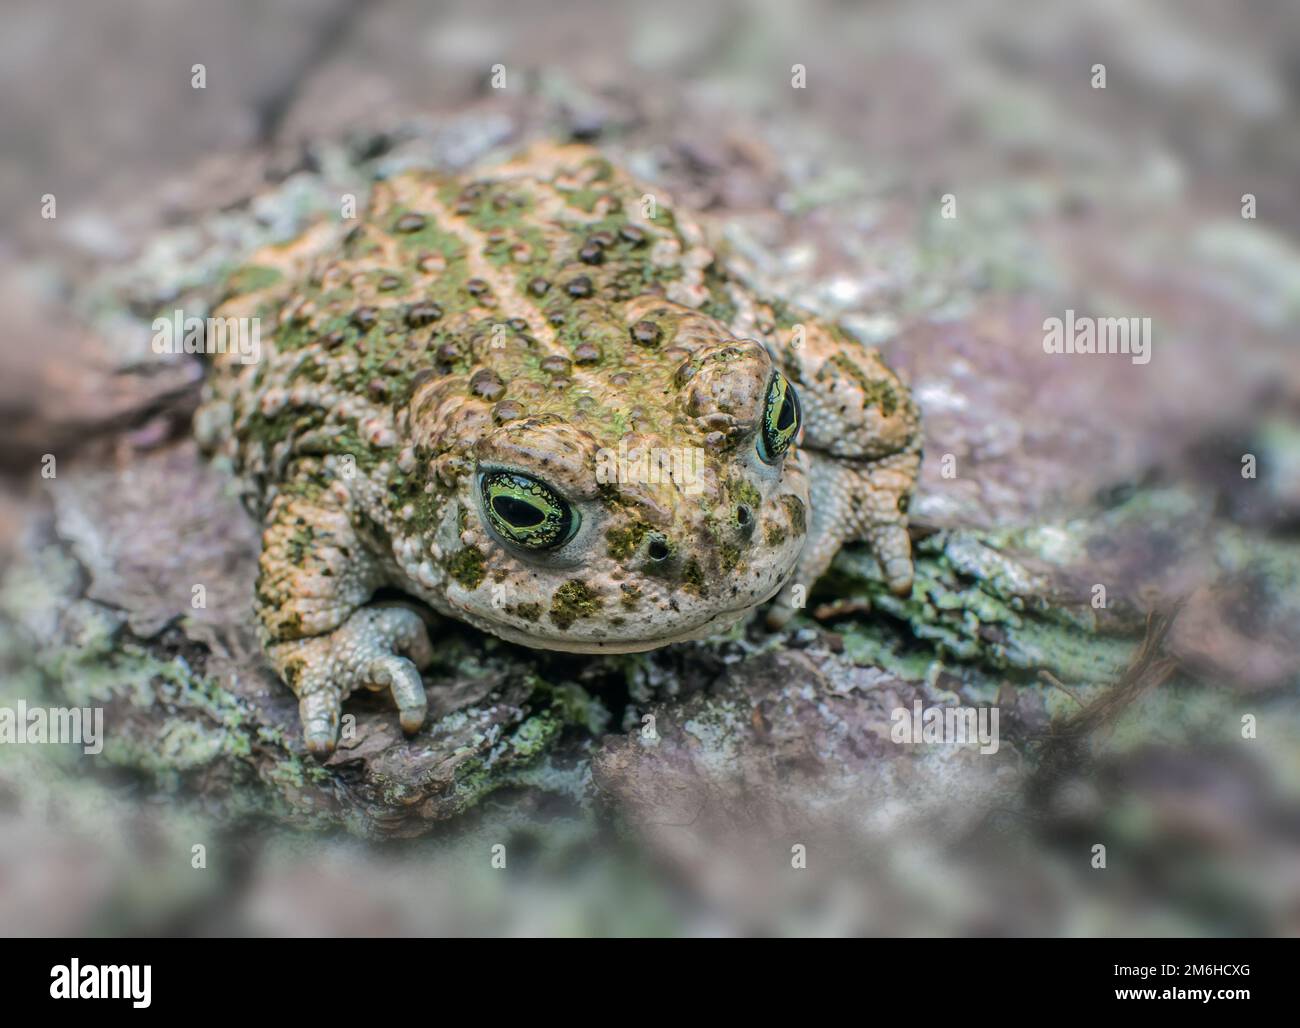 Natterjack toad 'Epidalea calamita' juvenile Stock Photo